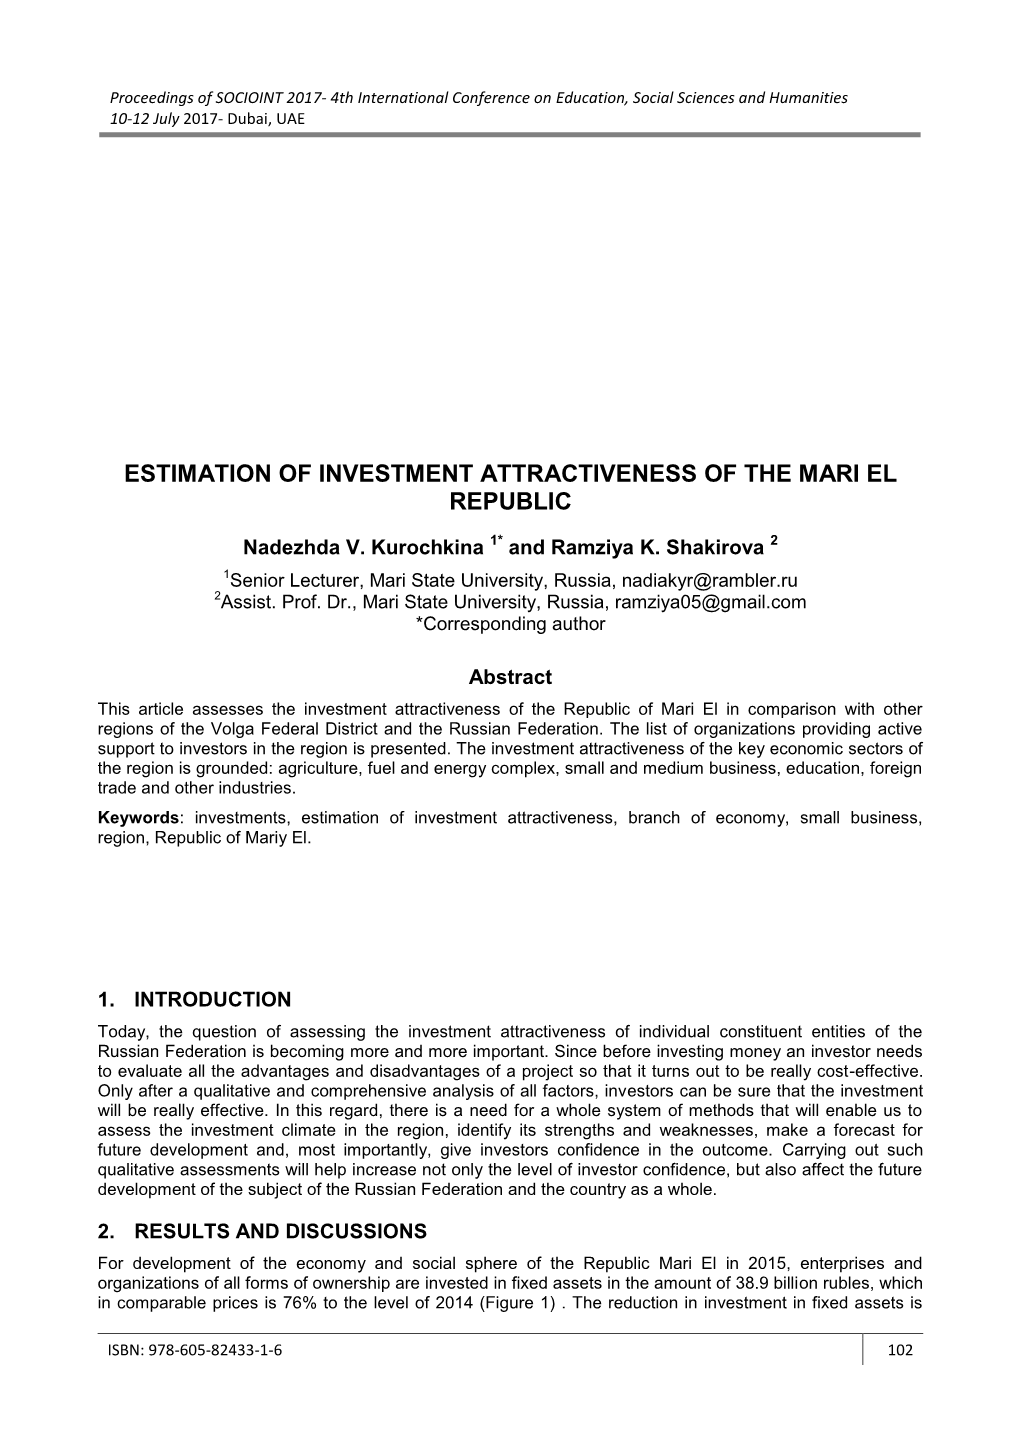 Estimation of Investment Attractiveness of the Mari El Republic